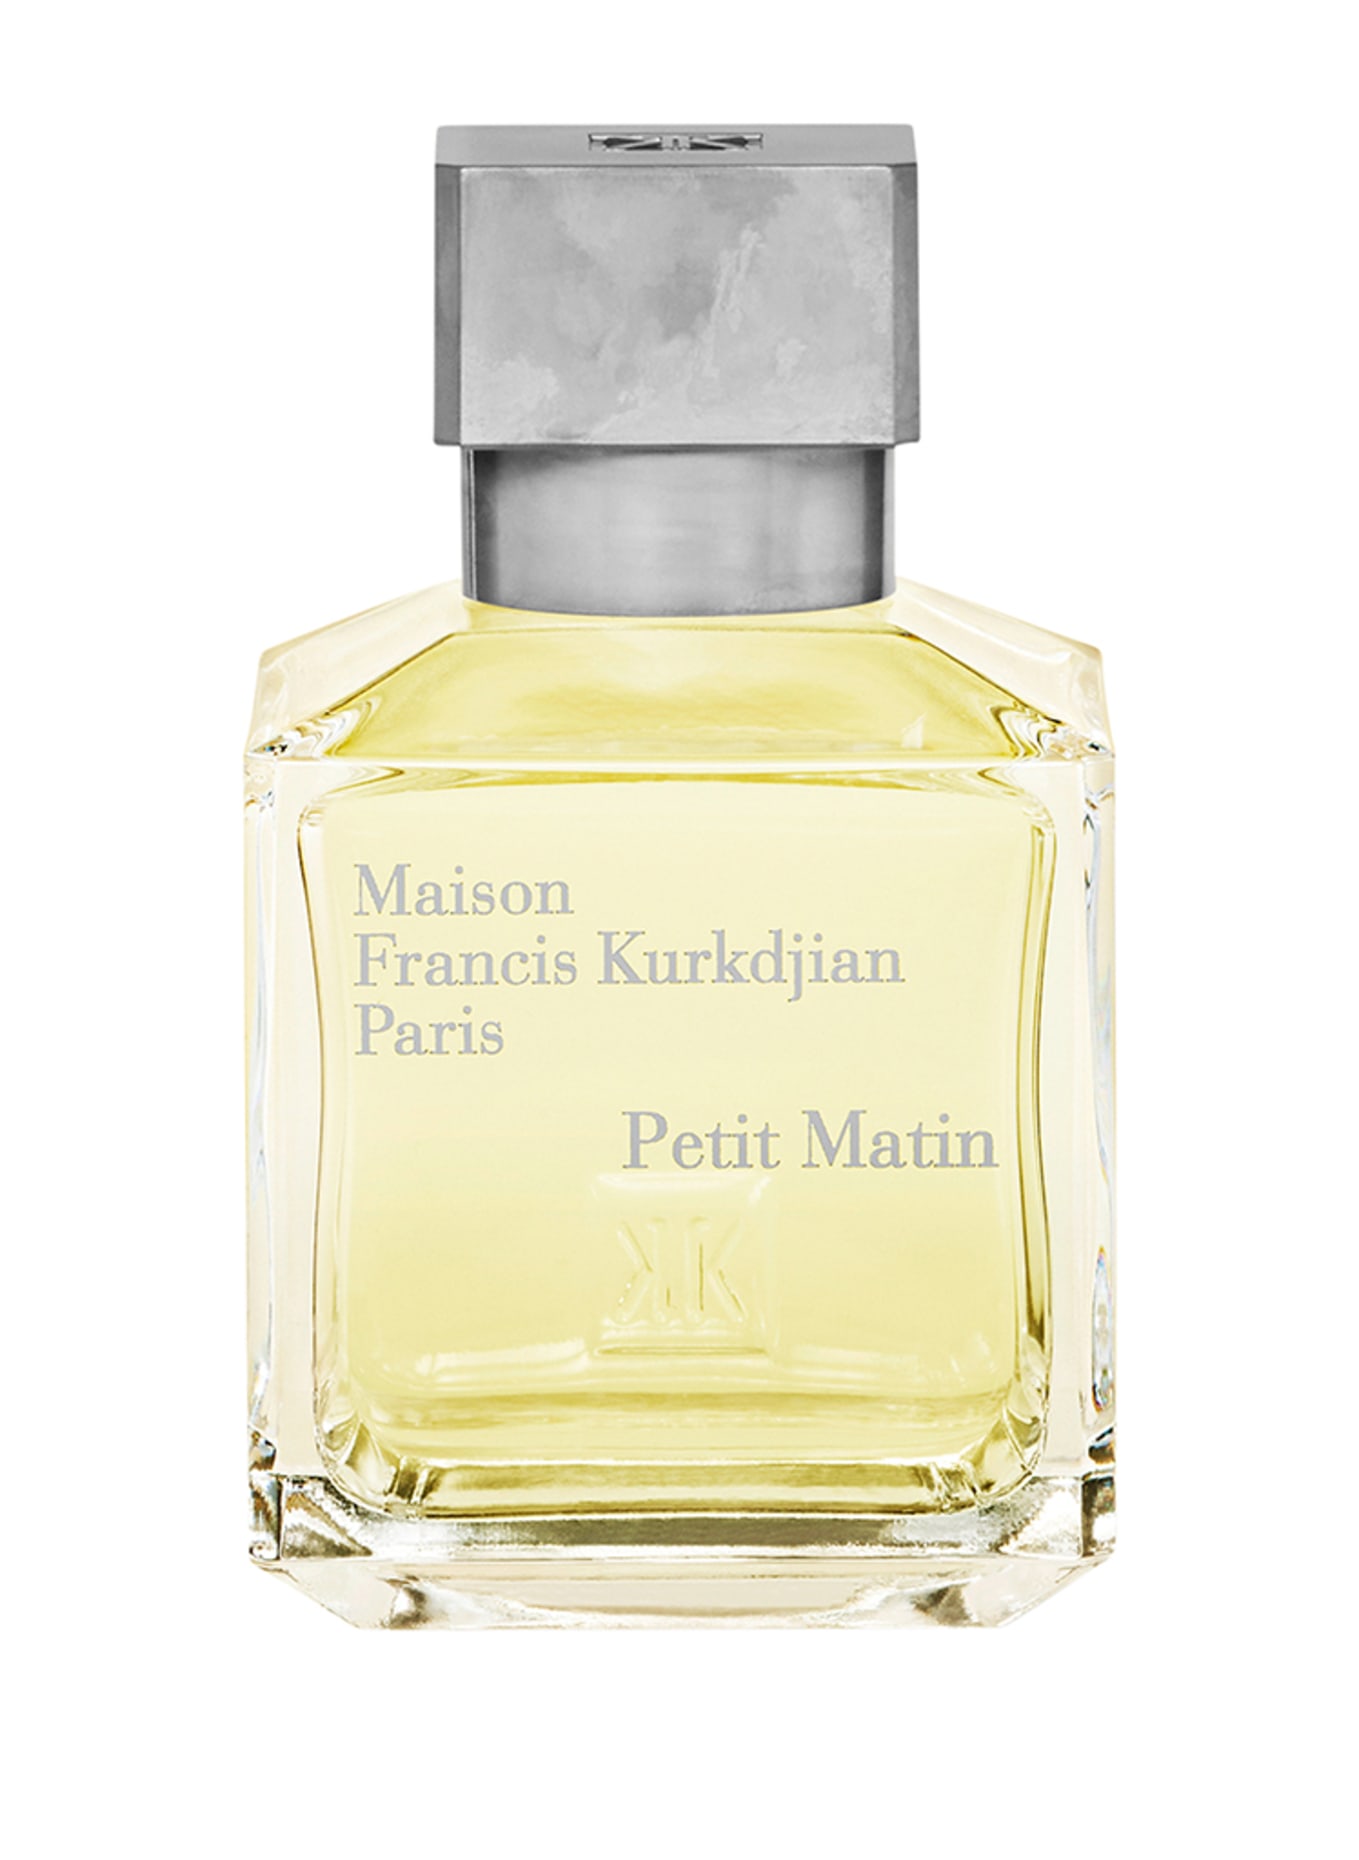 Maison Francis Kurkdjian Paris PETIT MATIN (Obrázek 1)